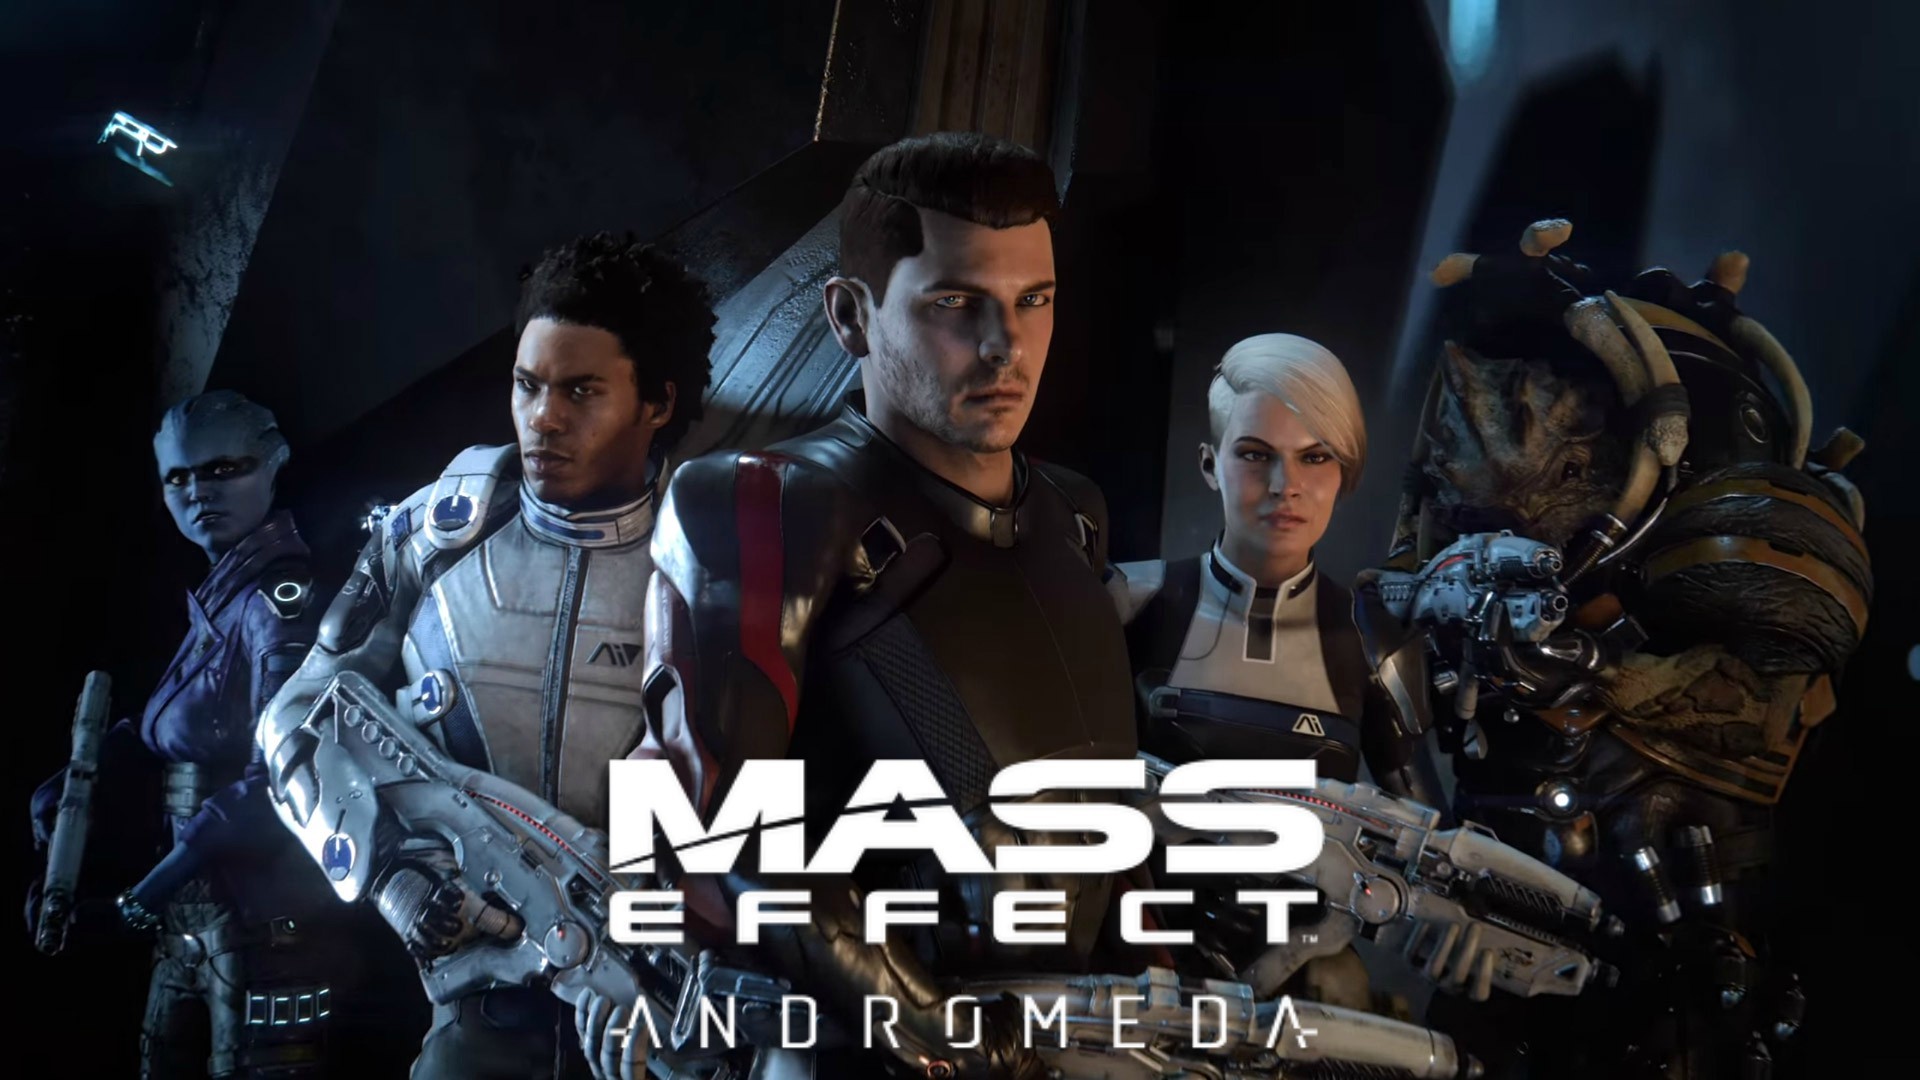 Ryder, Mass Effect: Andromeda, Mass Effect, Andromeda Initiative Wallpaper